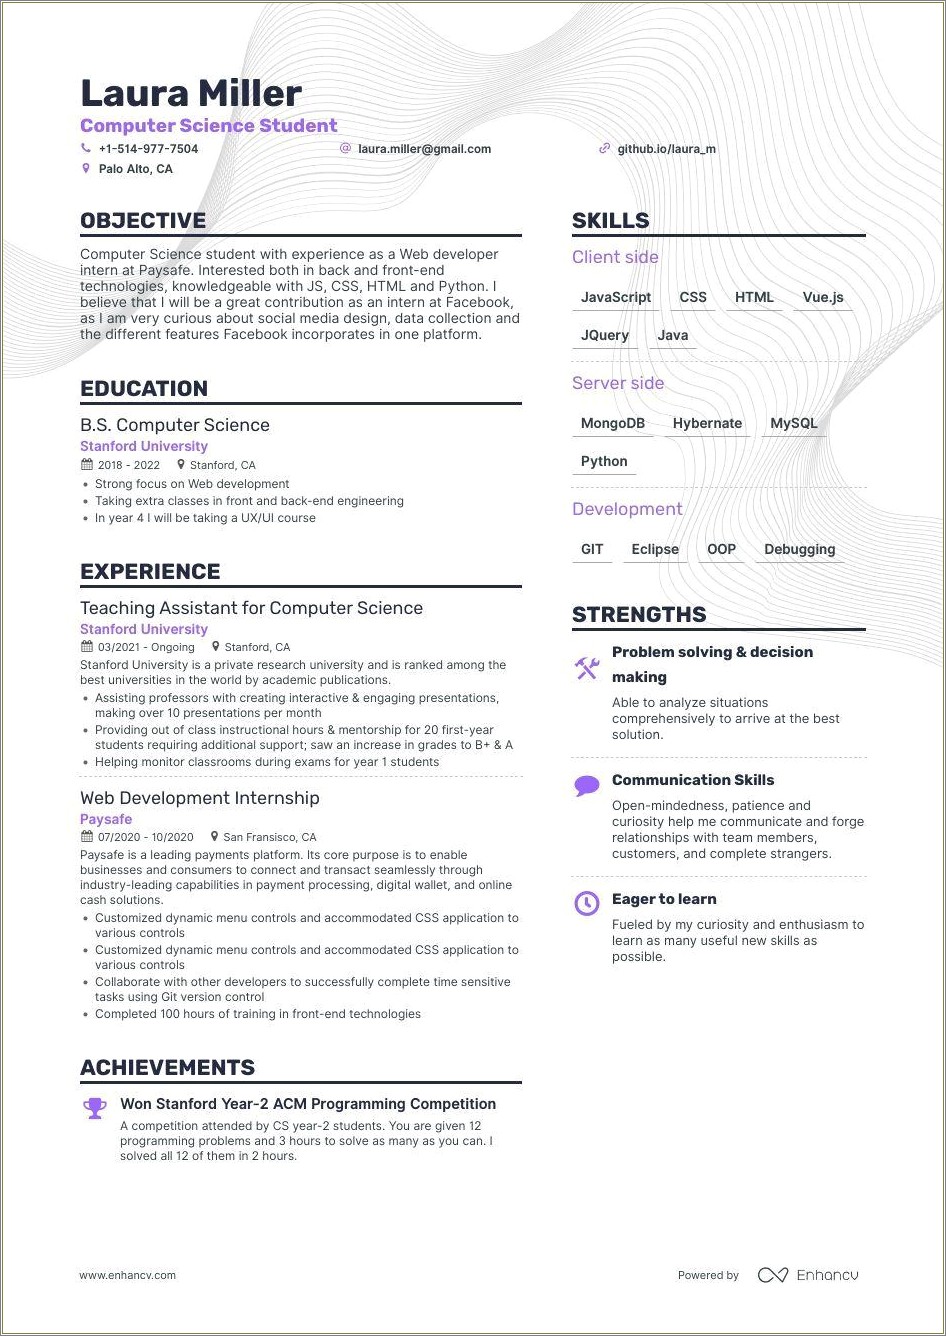 Sample Resume For Cs Management Trainee